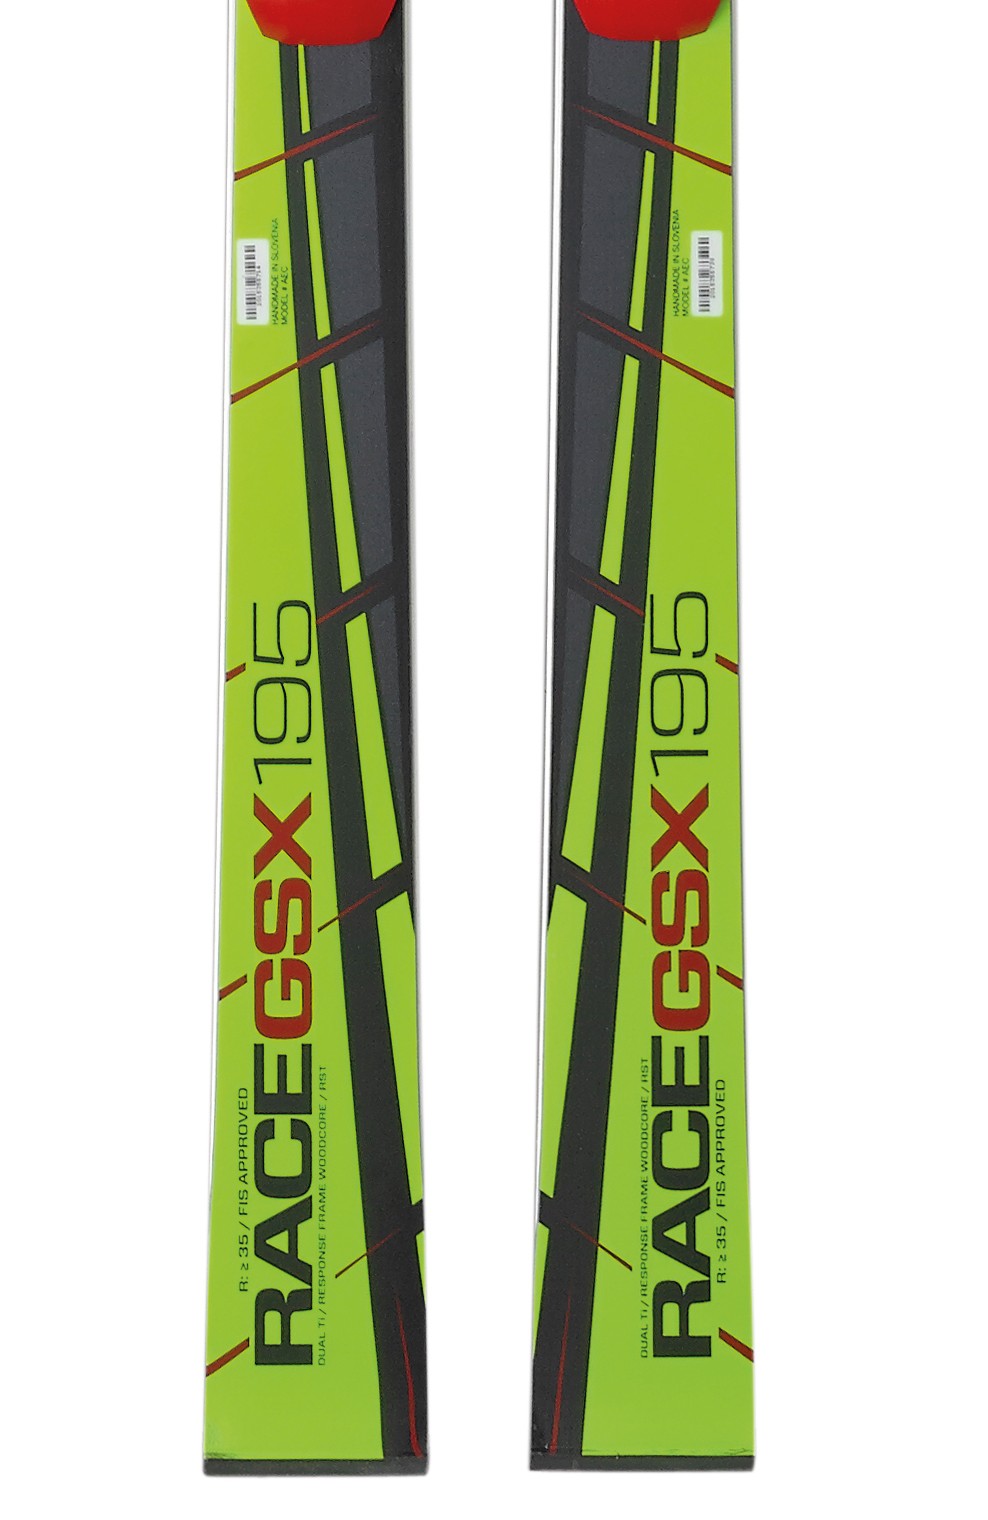 New 2015 Elan Race GSX Amphibio Plate FIS racing skis 188 or 195 cm options 